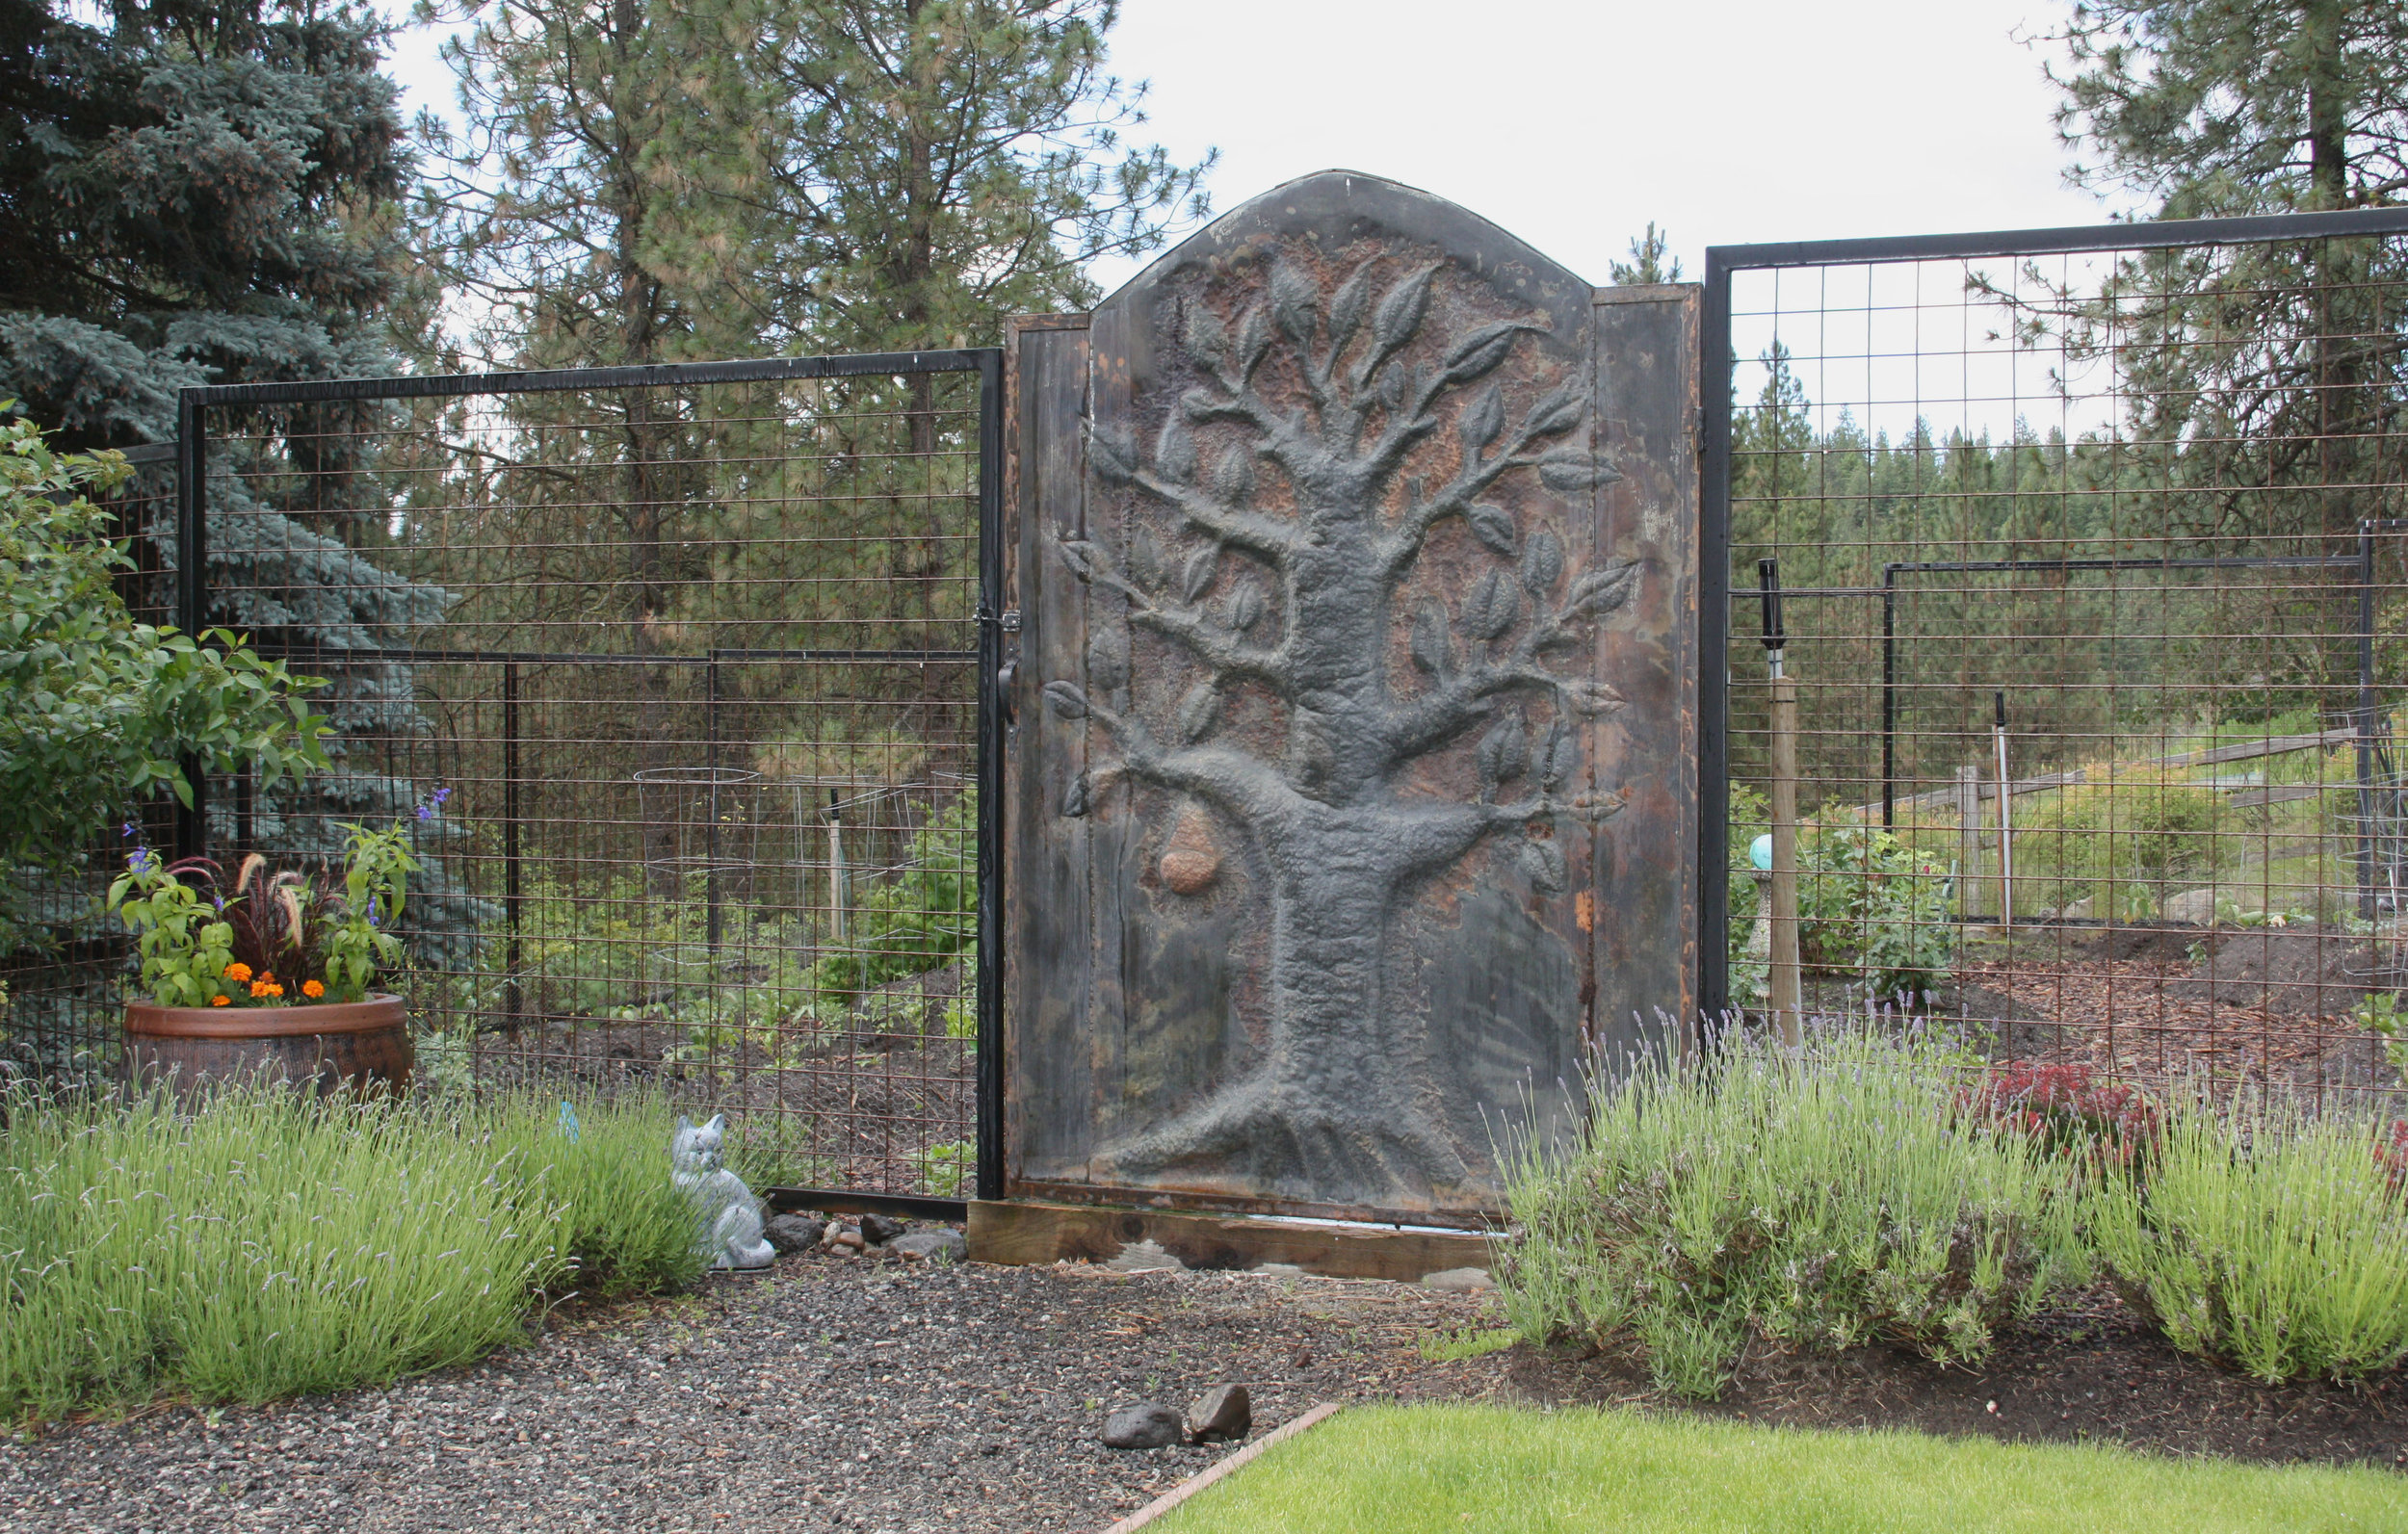 spokane metal sculpture garden gate